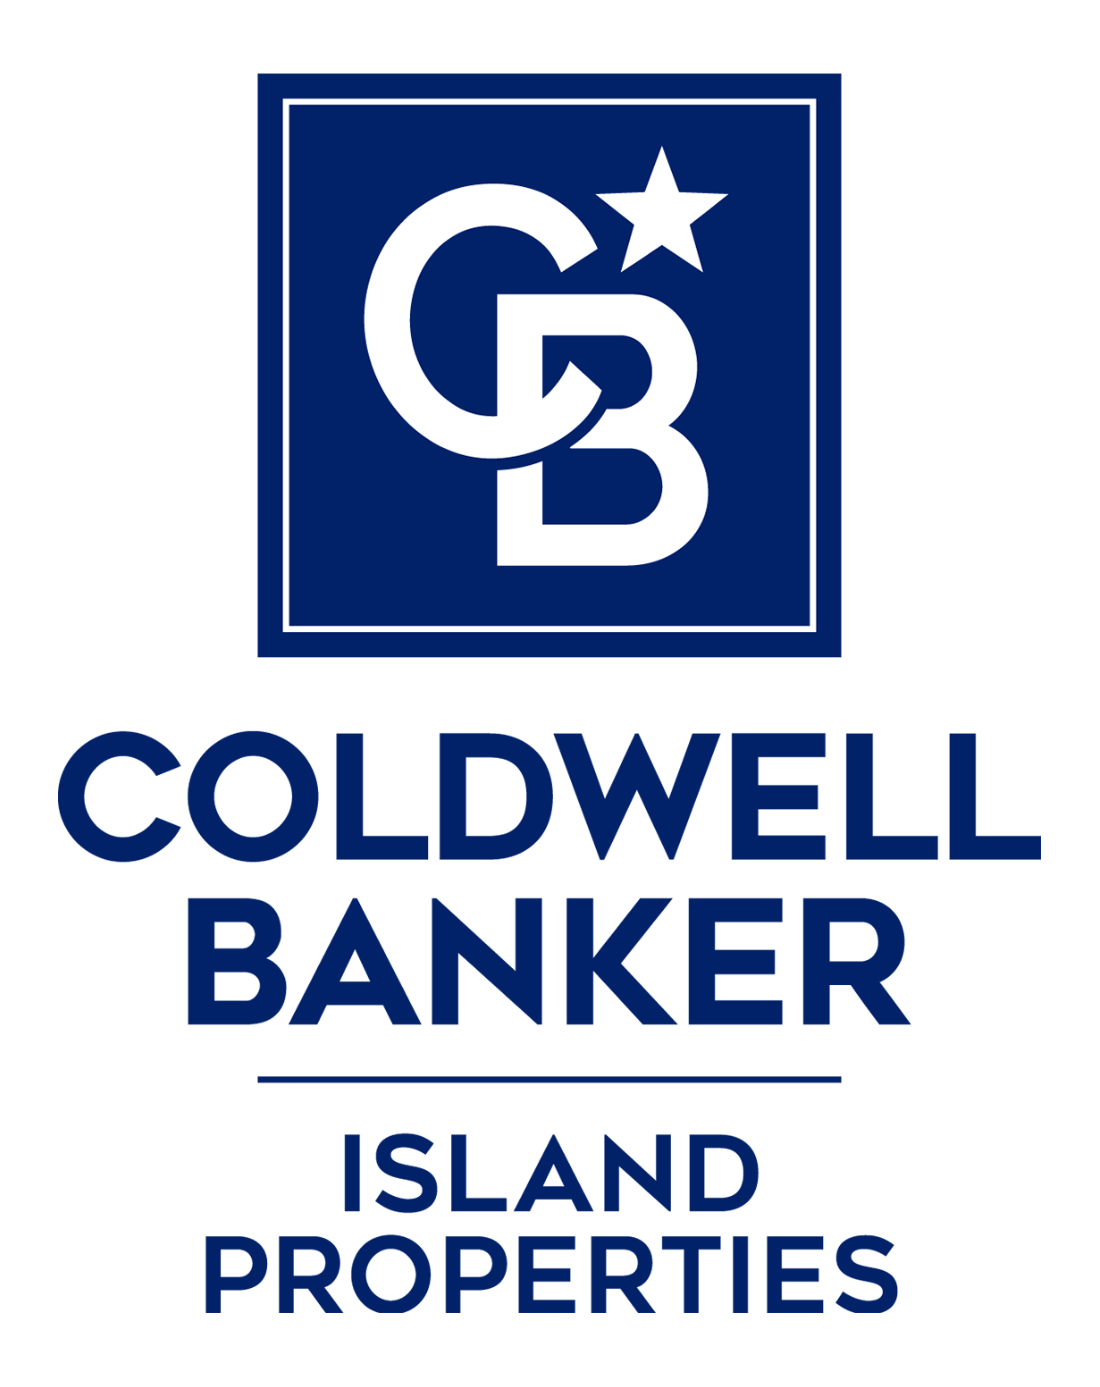 Jan Bryan - Coldwell Banker Island Properties Logo